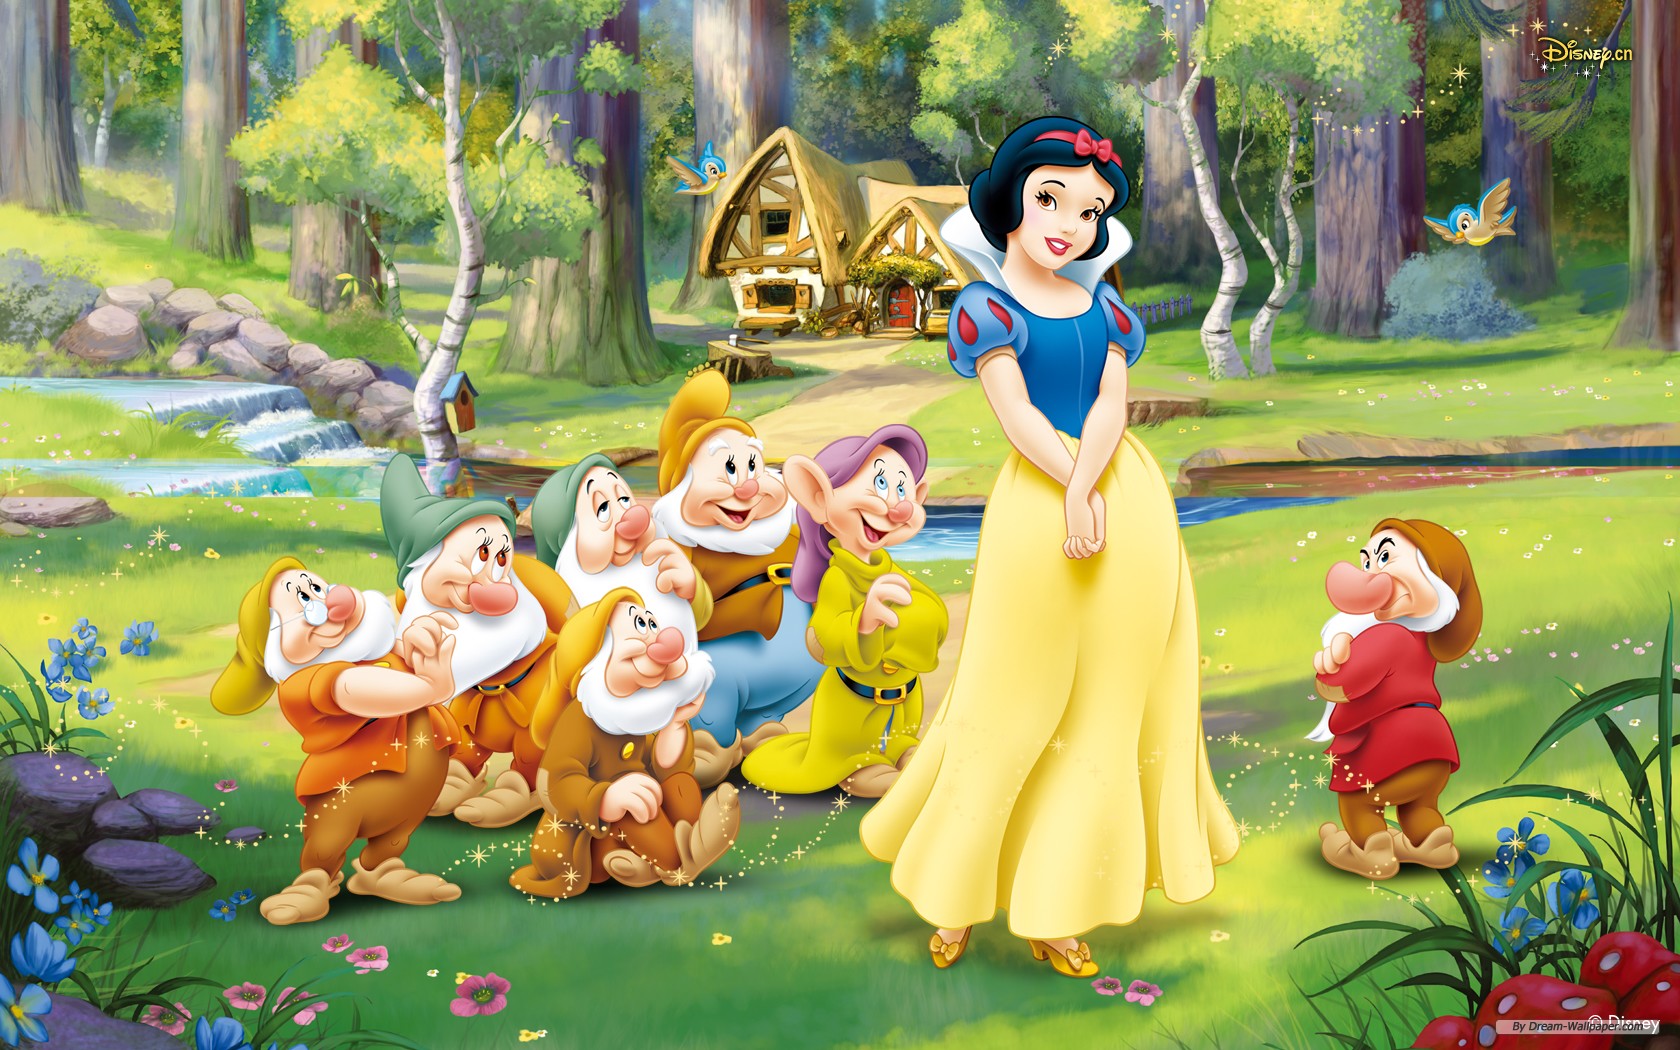 Wallpaper Cartoon Disney Princess